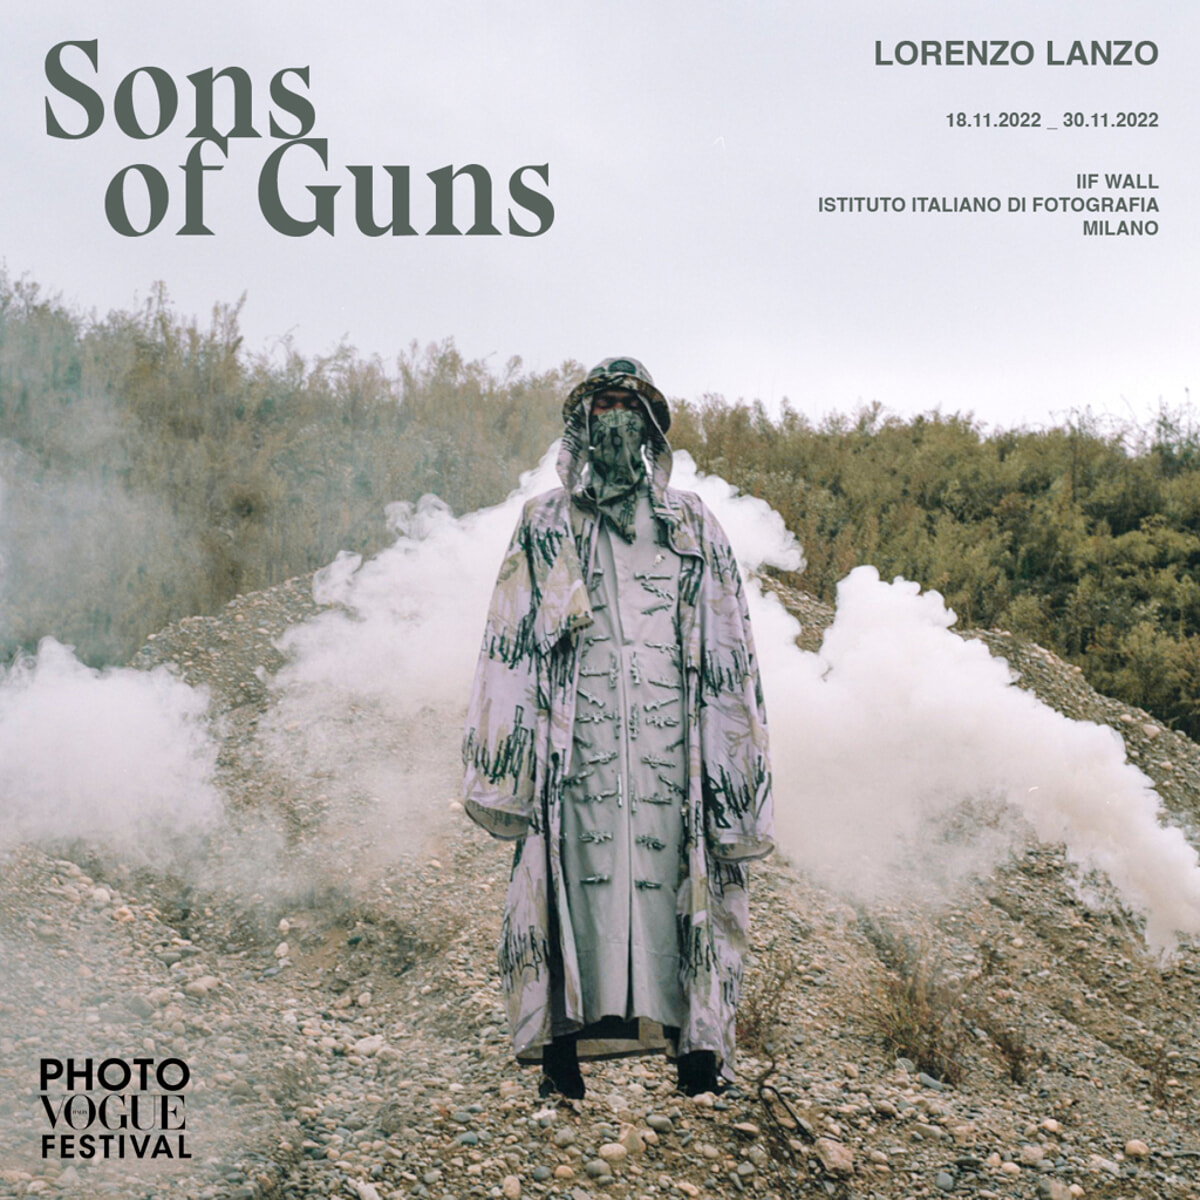 Mostra “Sons of guns” di Lorenzo Lanzo